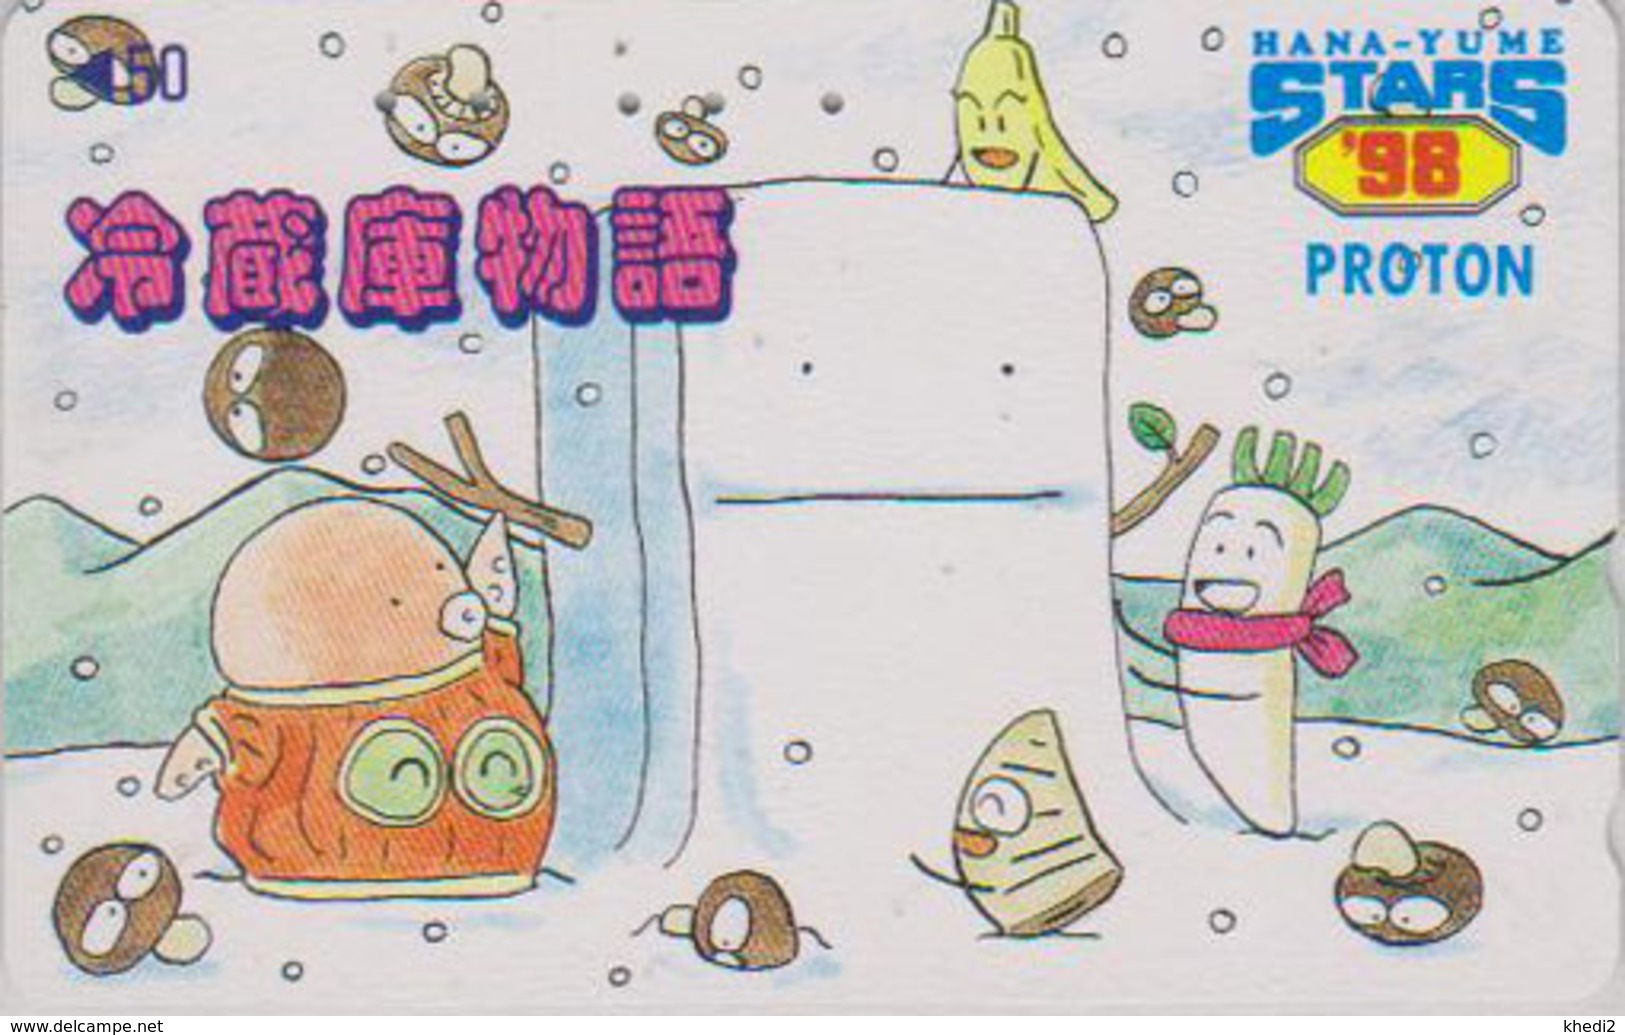 Télécarte Japon / 110-016 - MANGA - HANA TO YUME * Série STARS 98 * - PROTON - Japan Phonecard  Champignon Mushroom 9077 - BD